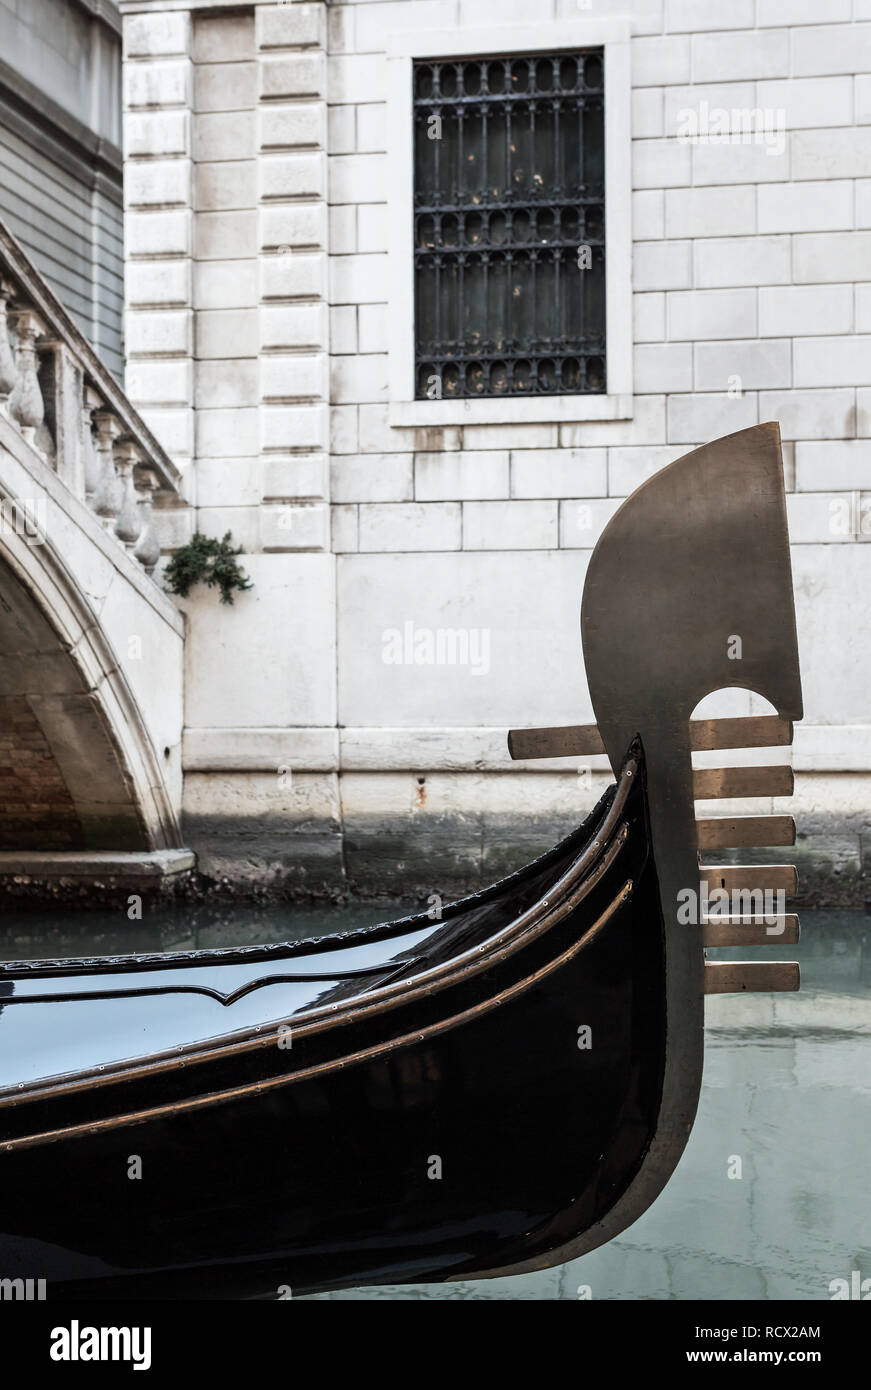 Nahaufnahme einer venezianischen Gondel Metall Design bei der Bug in Venedig, Italien Stockfoto